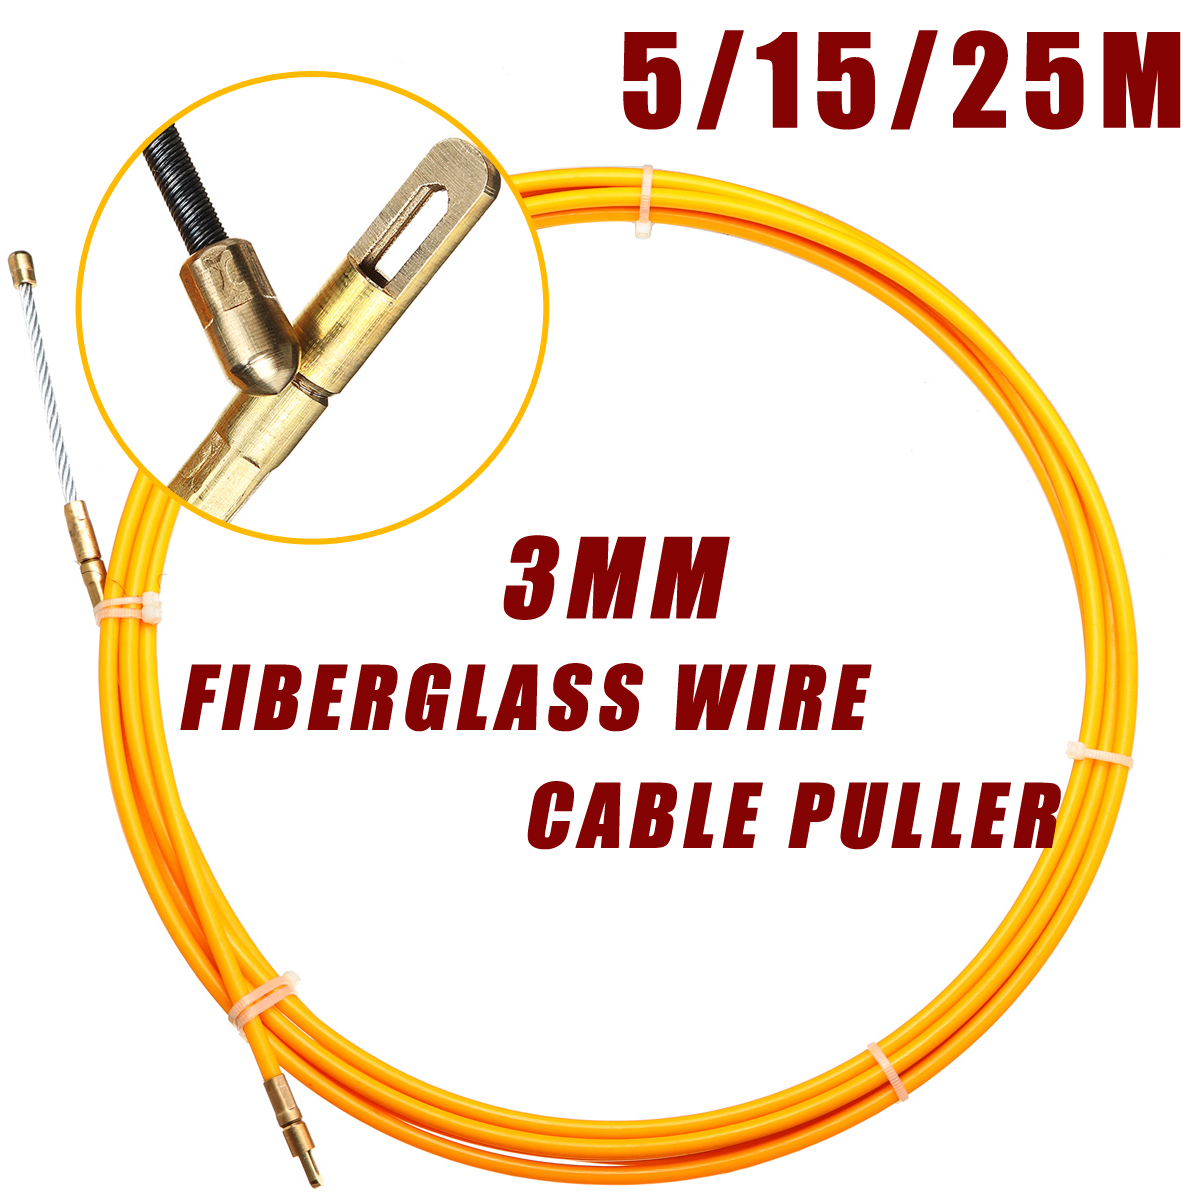 5M15M25M-3mm-Fiberglass-Cable-Puller-Fish-Tape-Reel-Conduit-Ducting-Rodder-Pulling-Puller-1378125-1